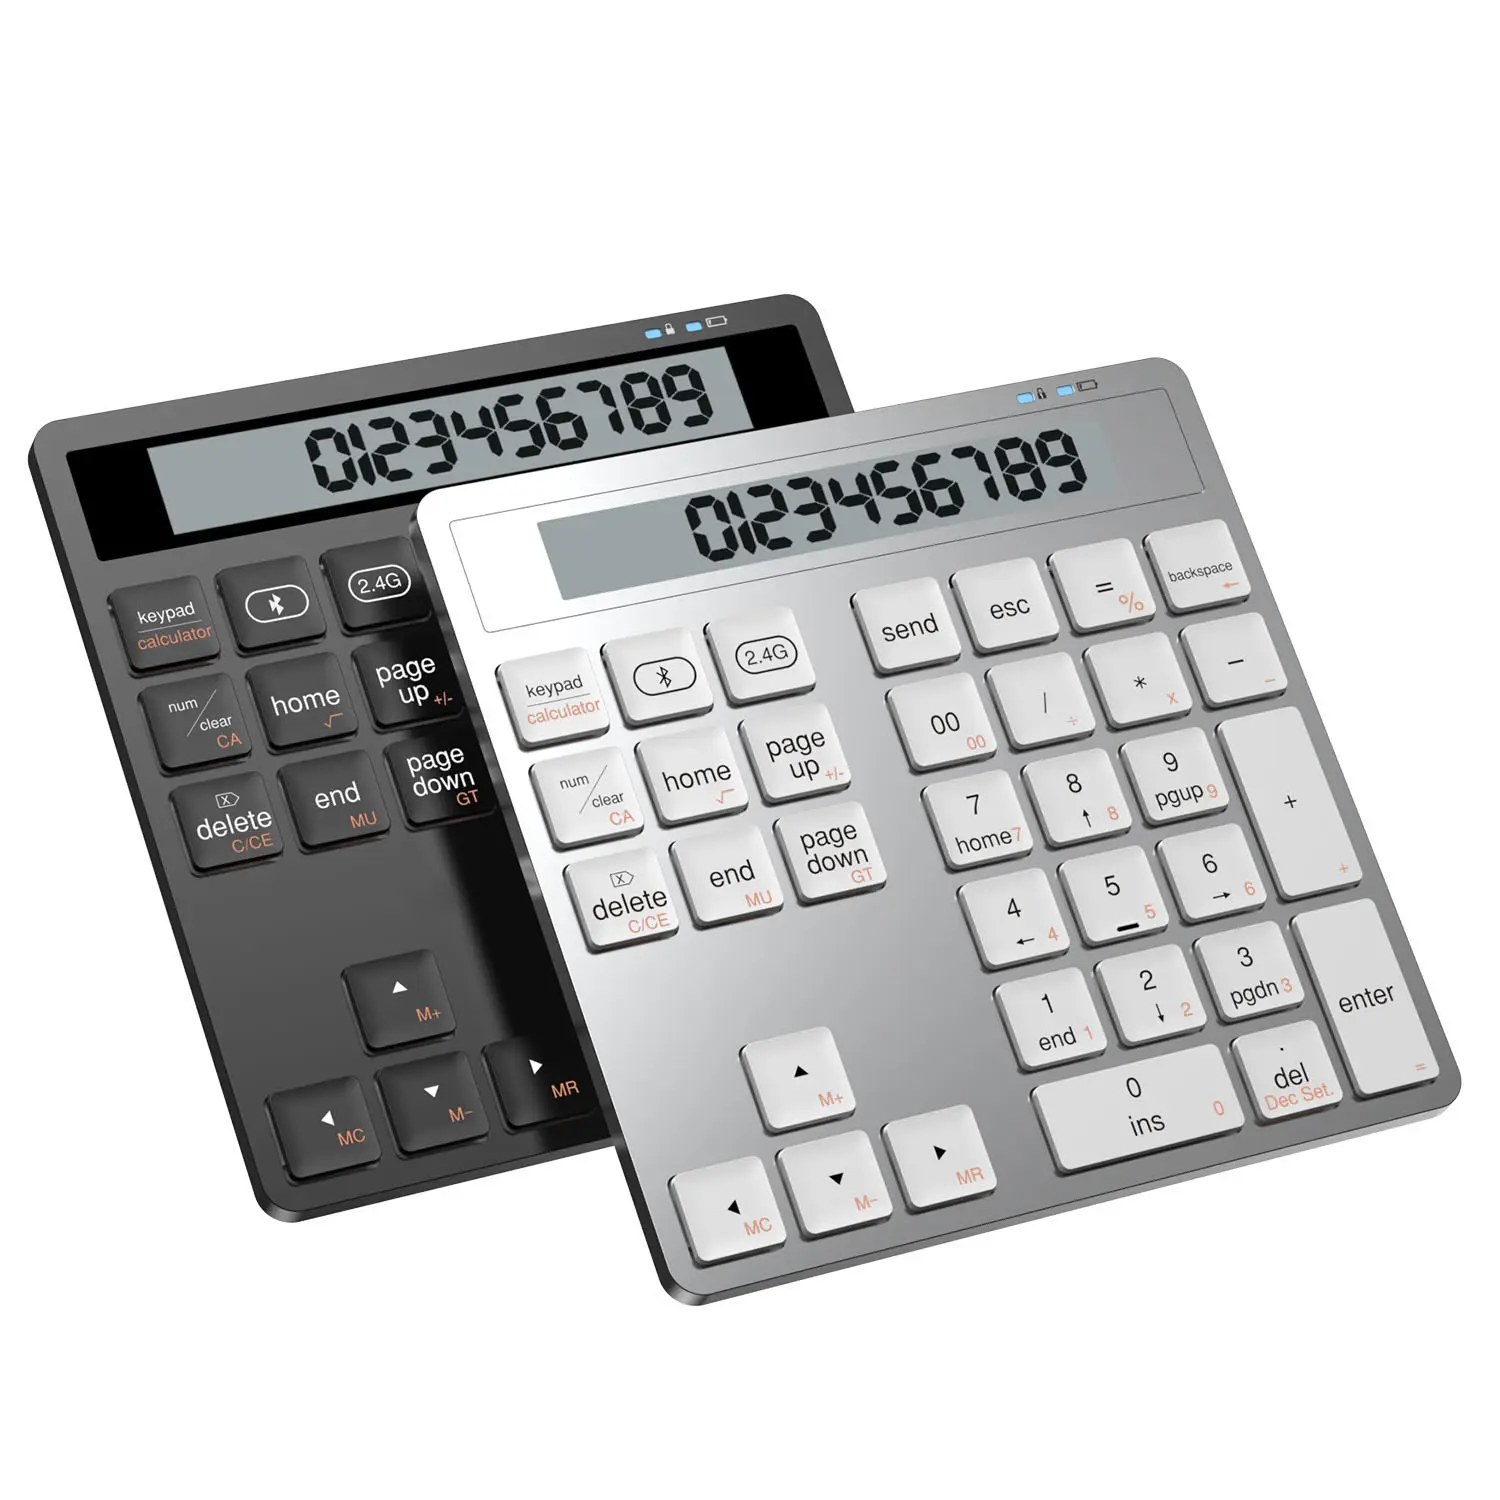 Dual mode bluetooth teclado numérico mini 2.4g usb sem fio 2 em 1 34 teclas teclado numérico teclado & calculadora com display lcd